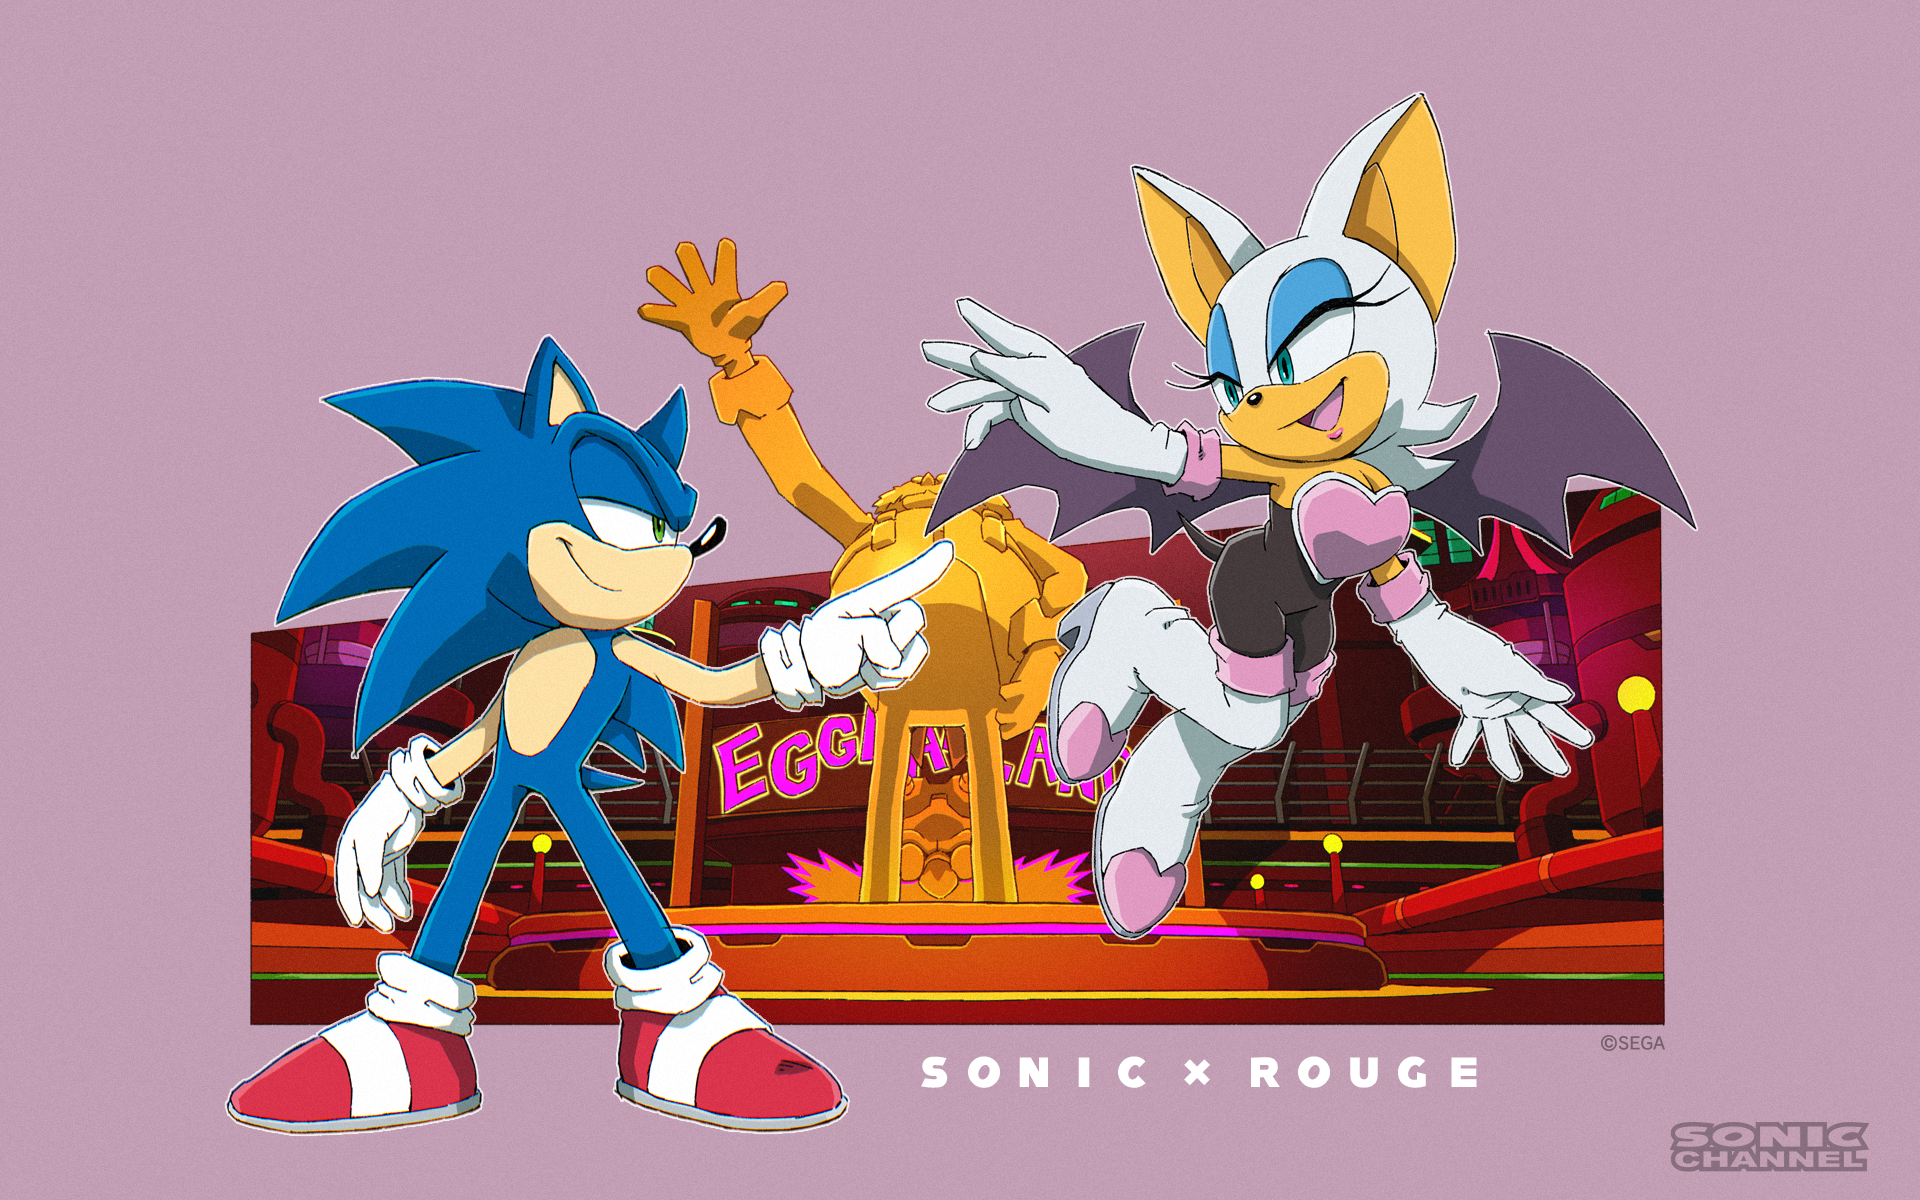 Sonic & Rouge